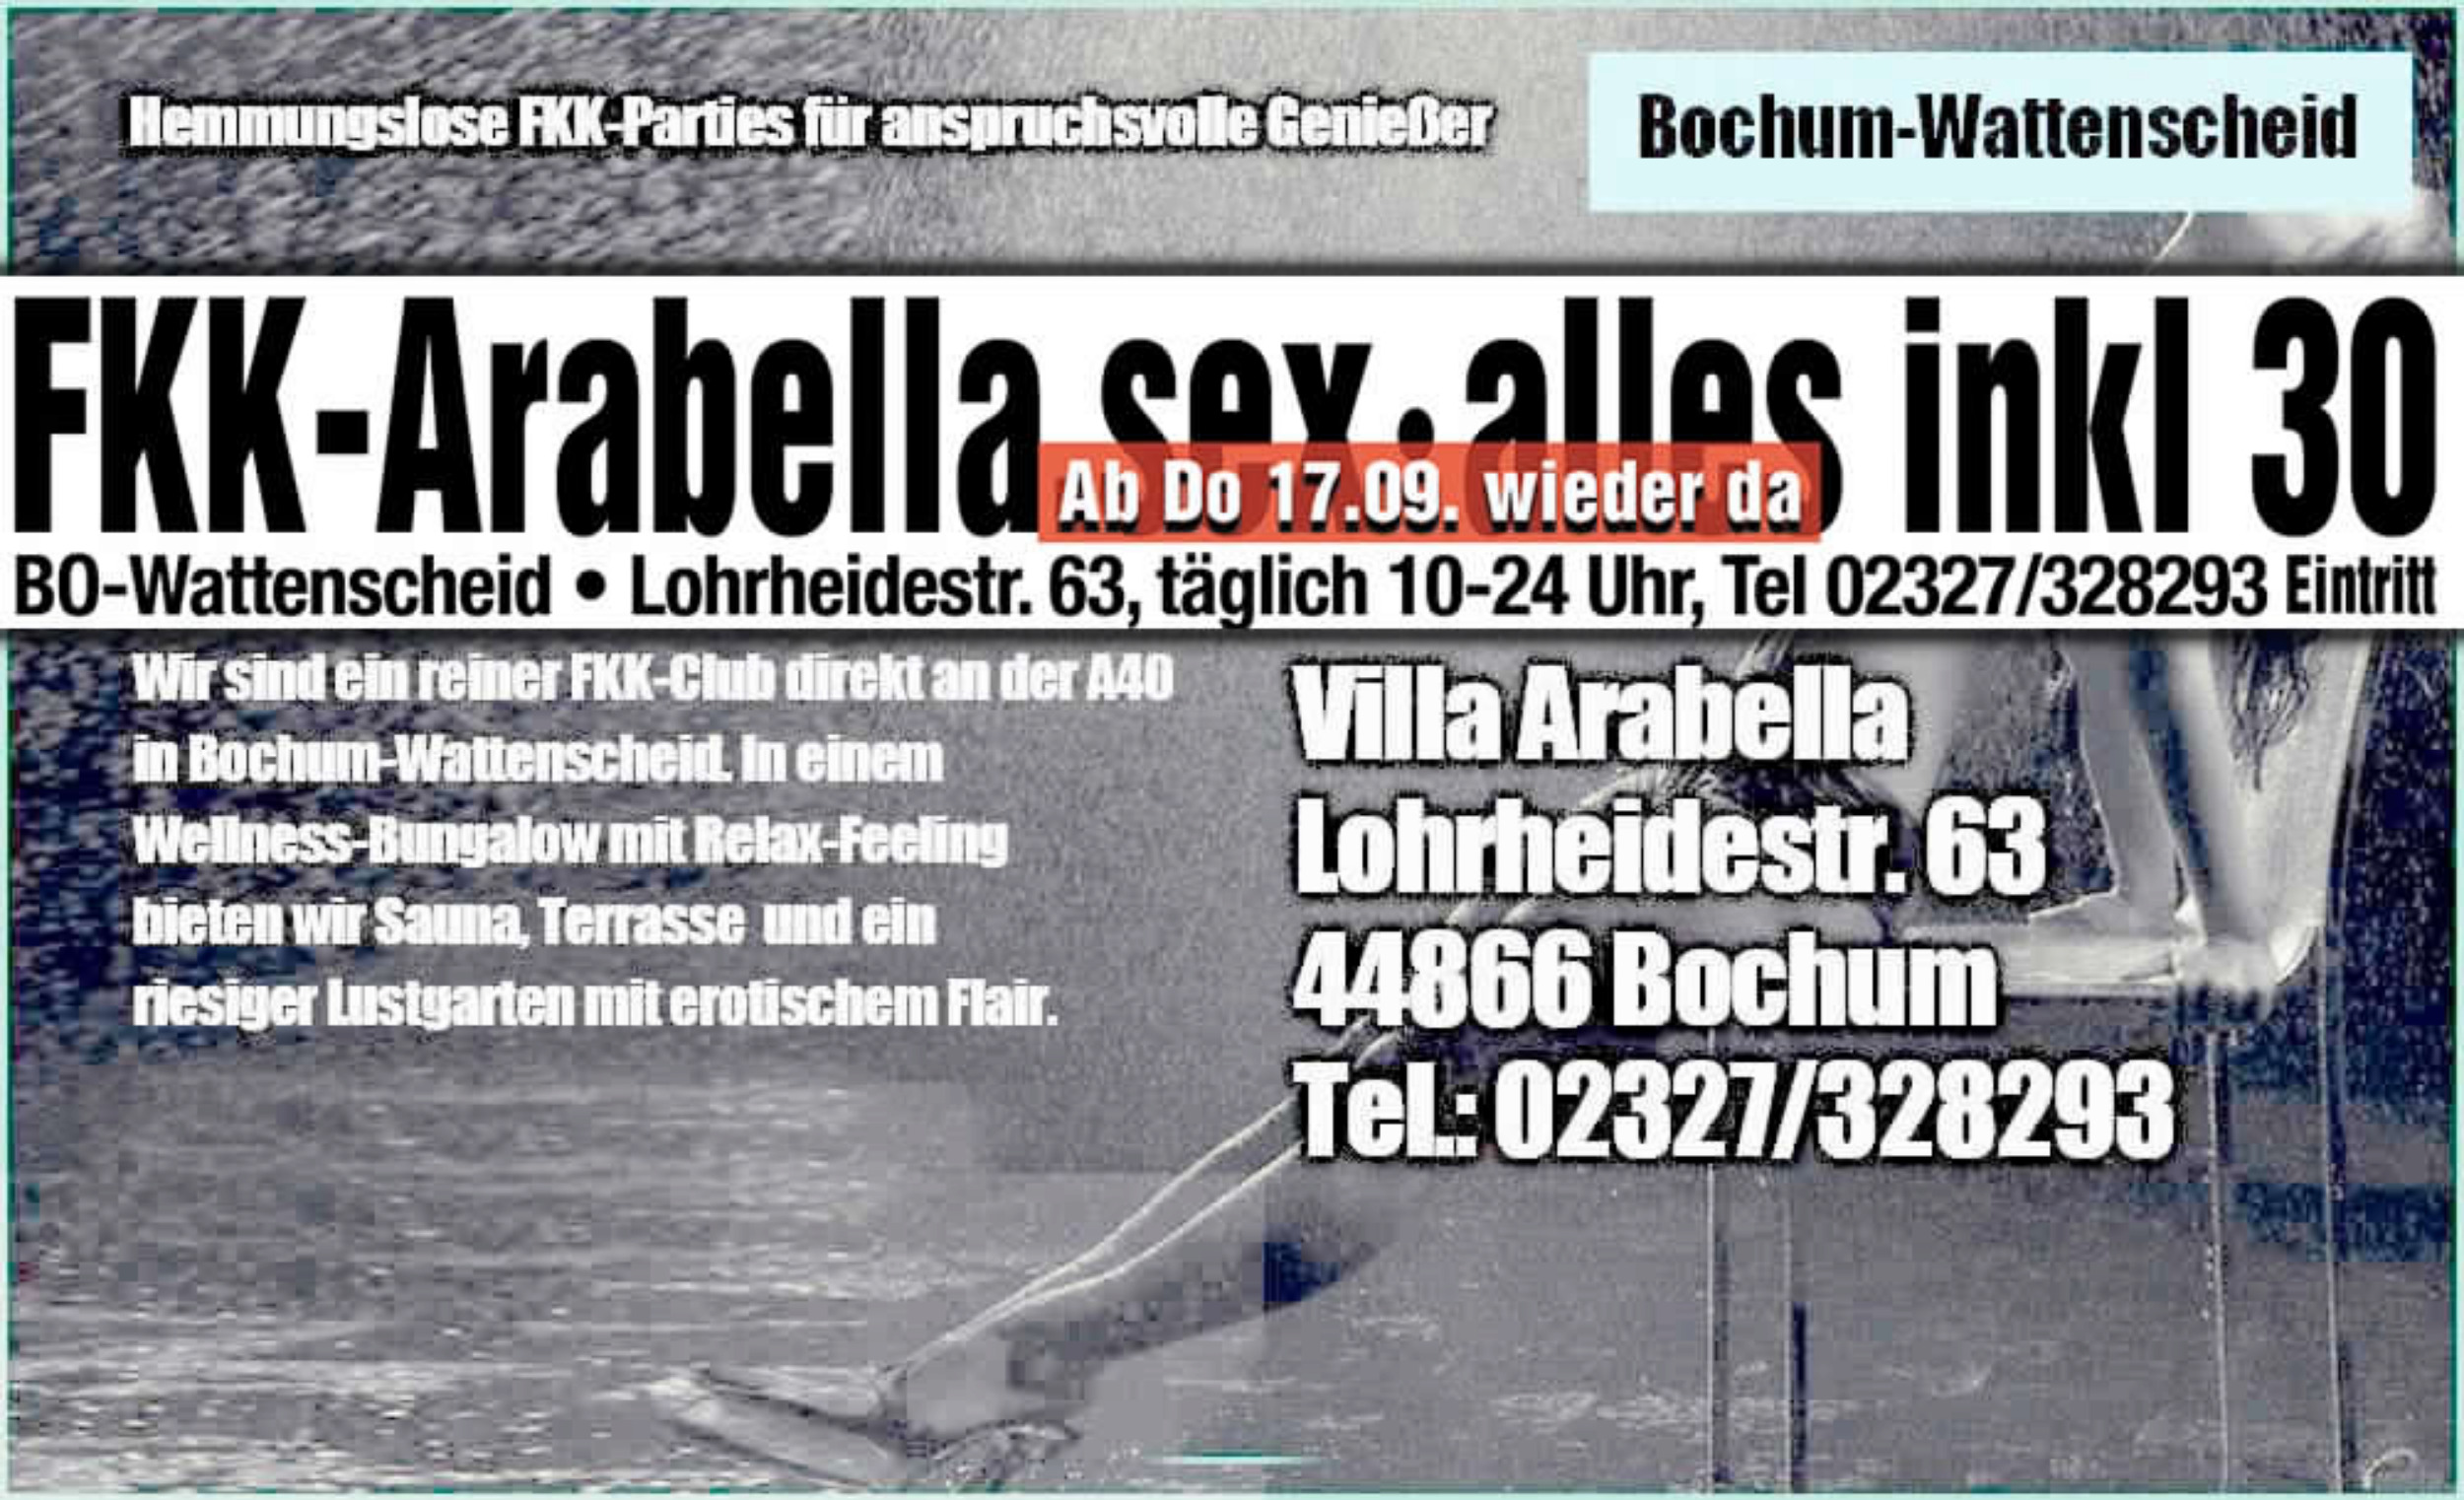 Screenshot_2020-09-16 fkk-arabella sex.jpg